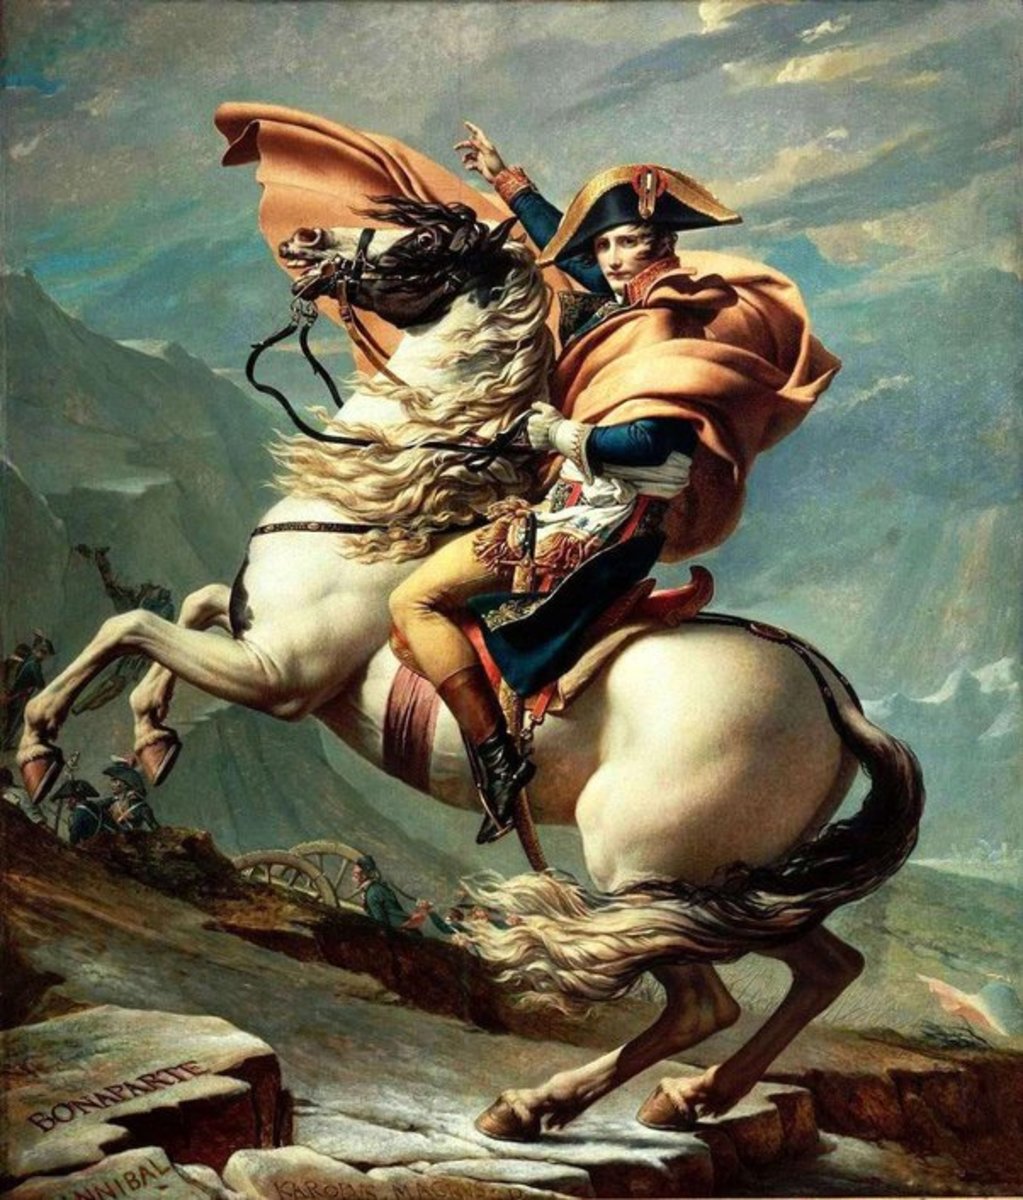 Napoleon Bonaparte: Hero or Dictator